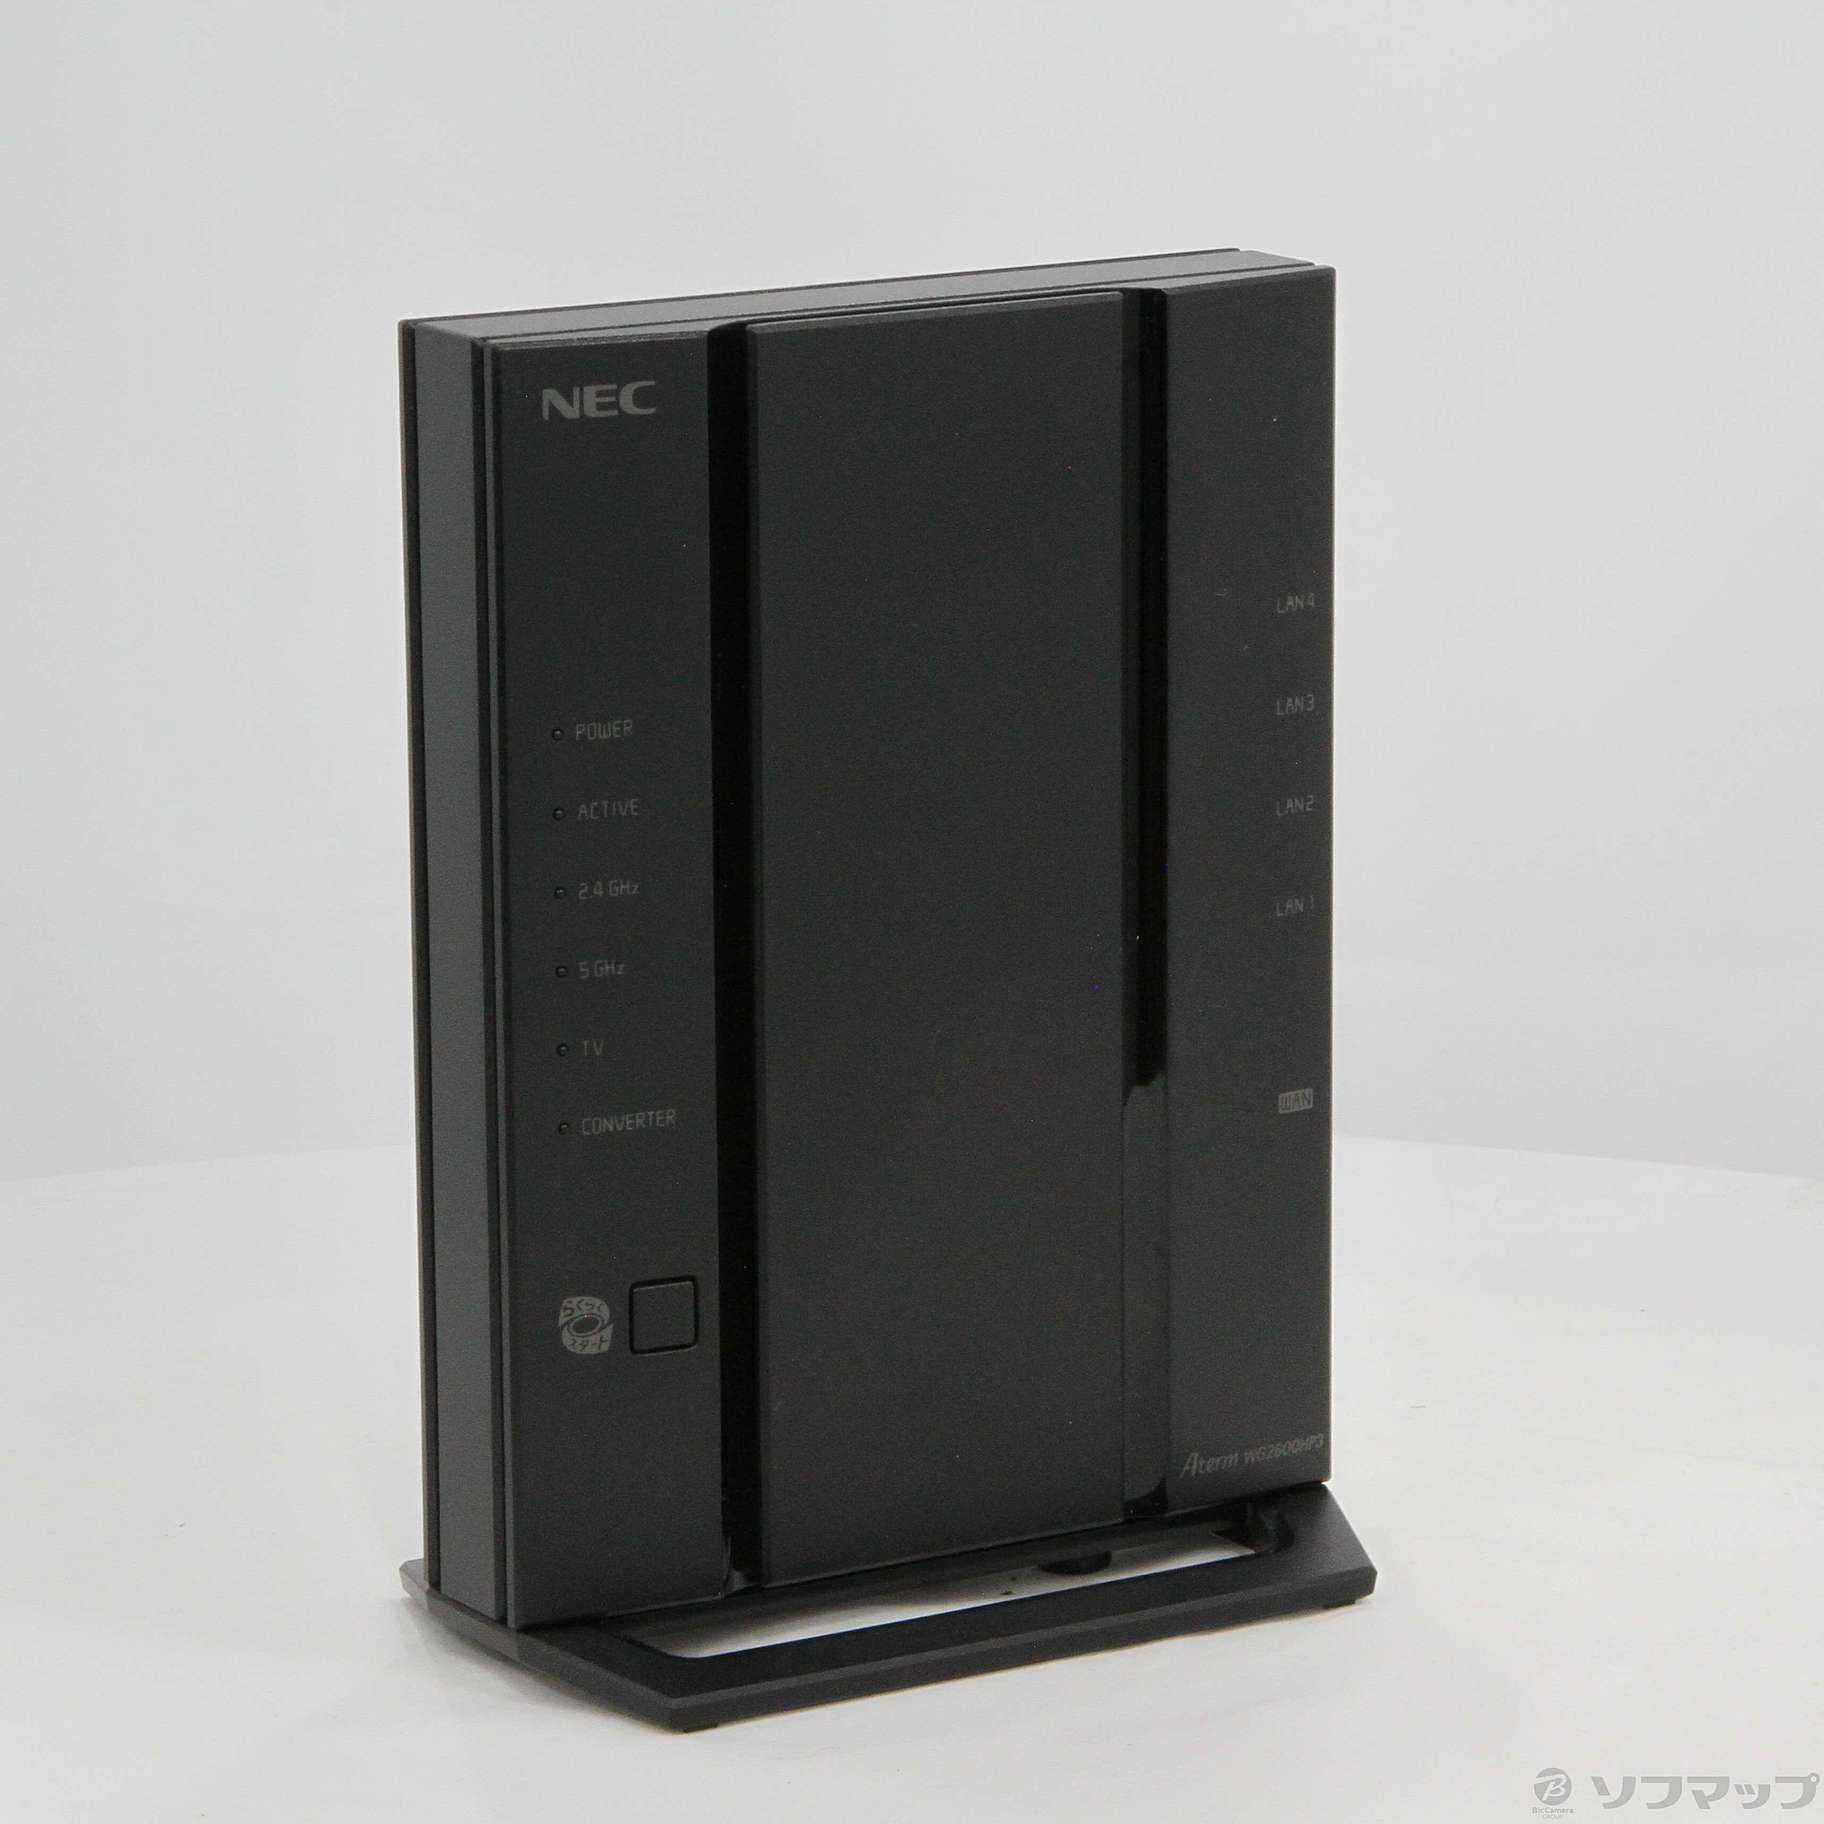 NECAterm発売日美品 PA-WG2600HP3 wifi無線LANルーター NEC - pure-home.eu